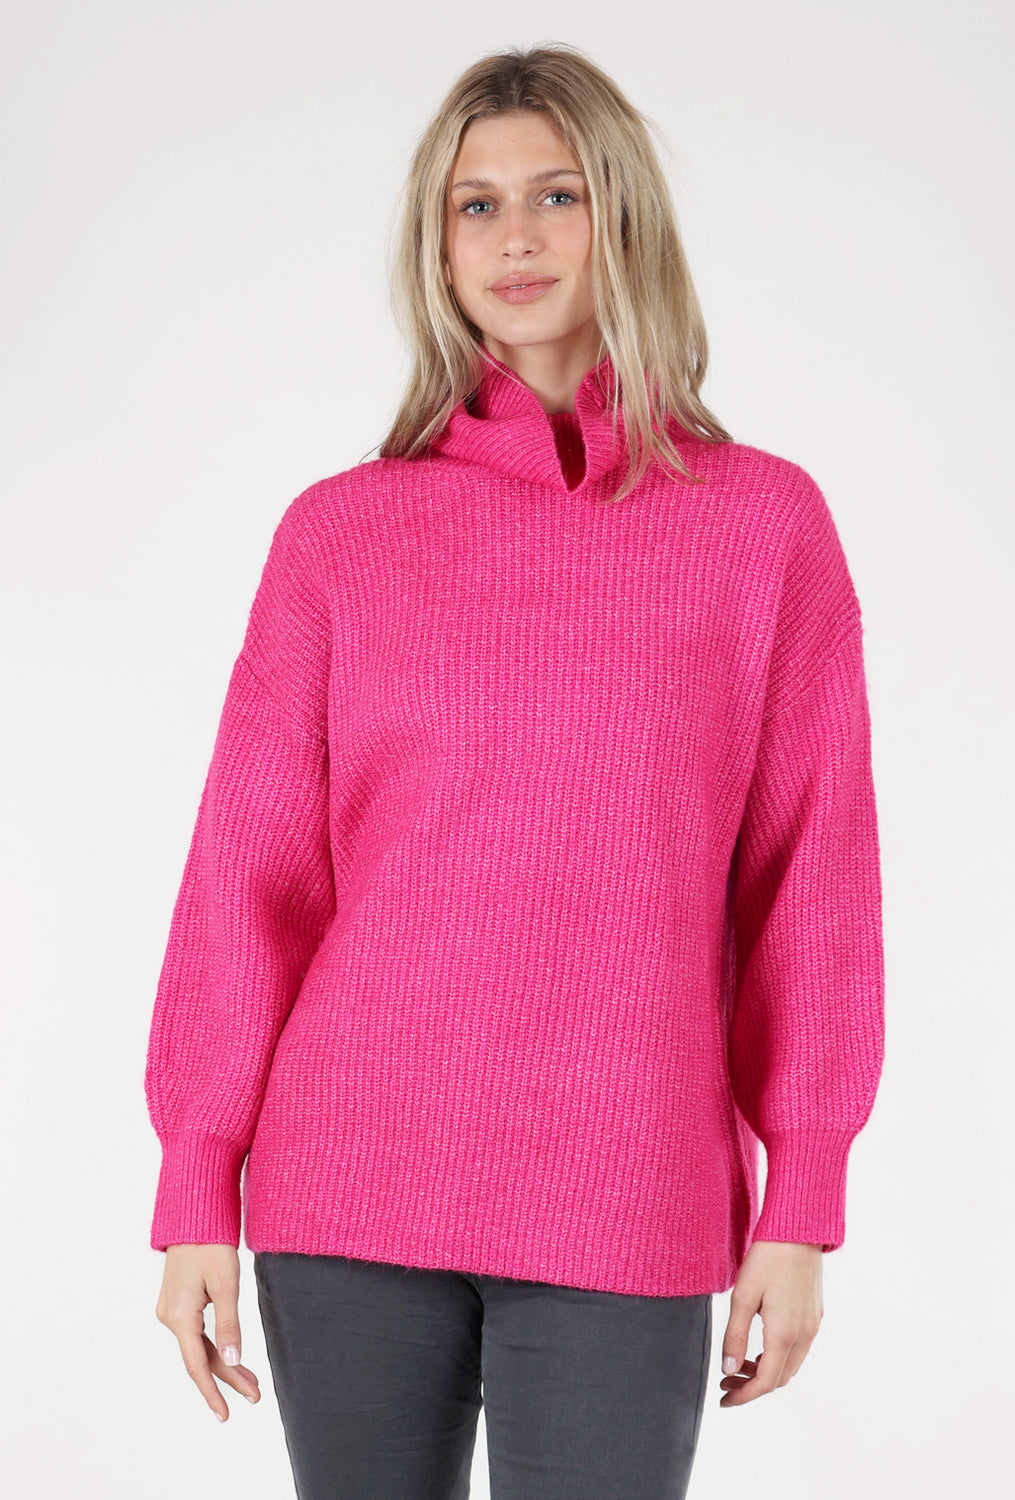 Cora Sweater, Fuchsia